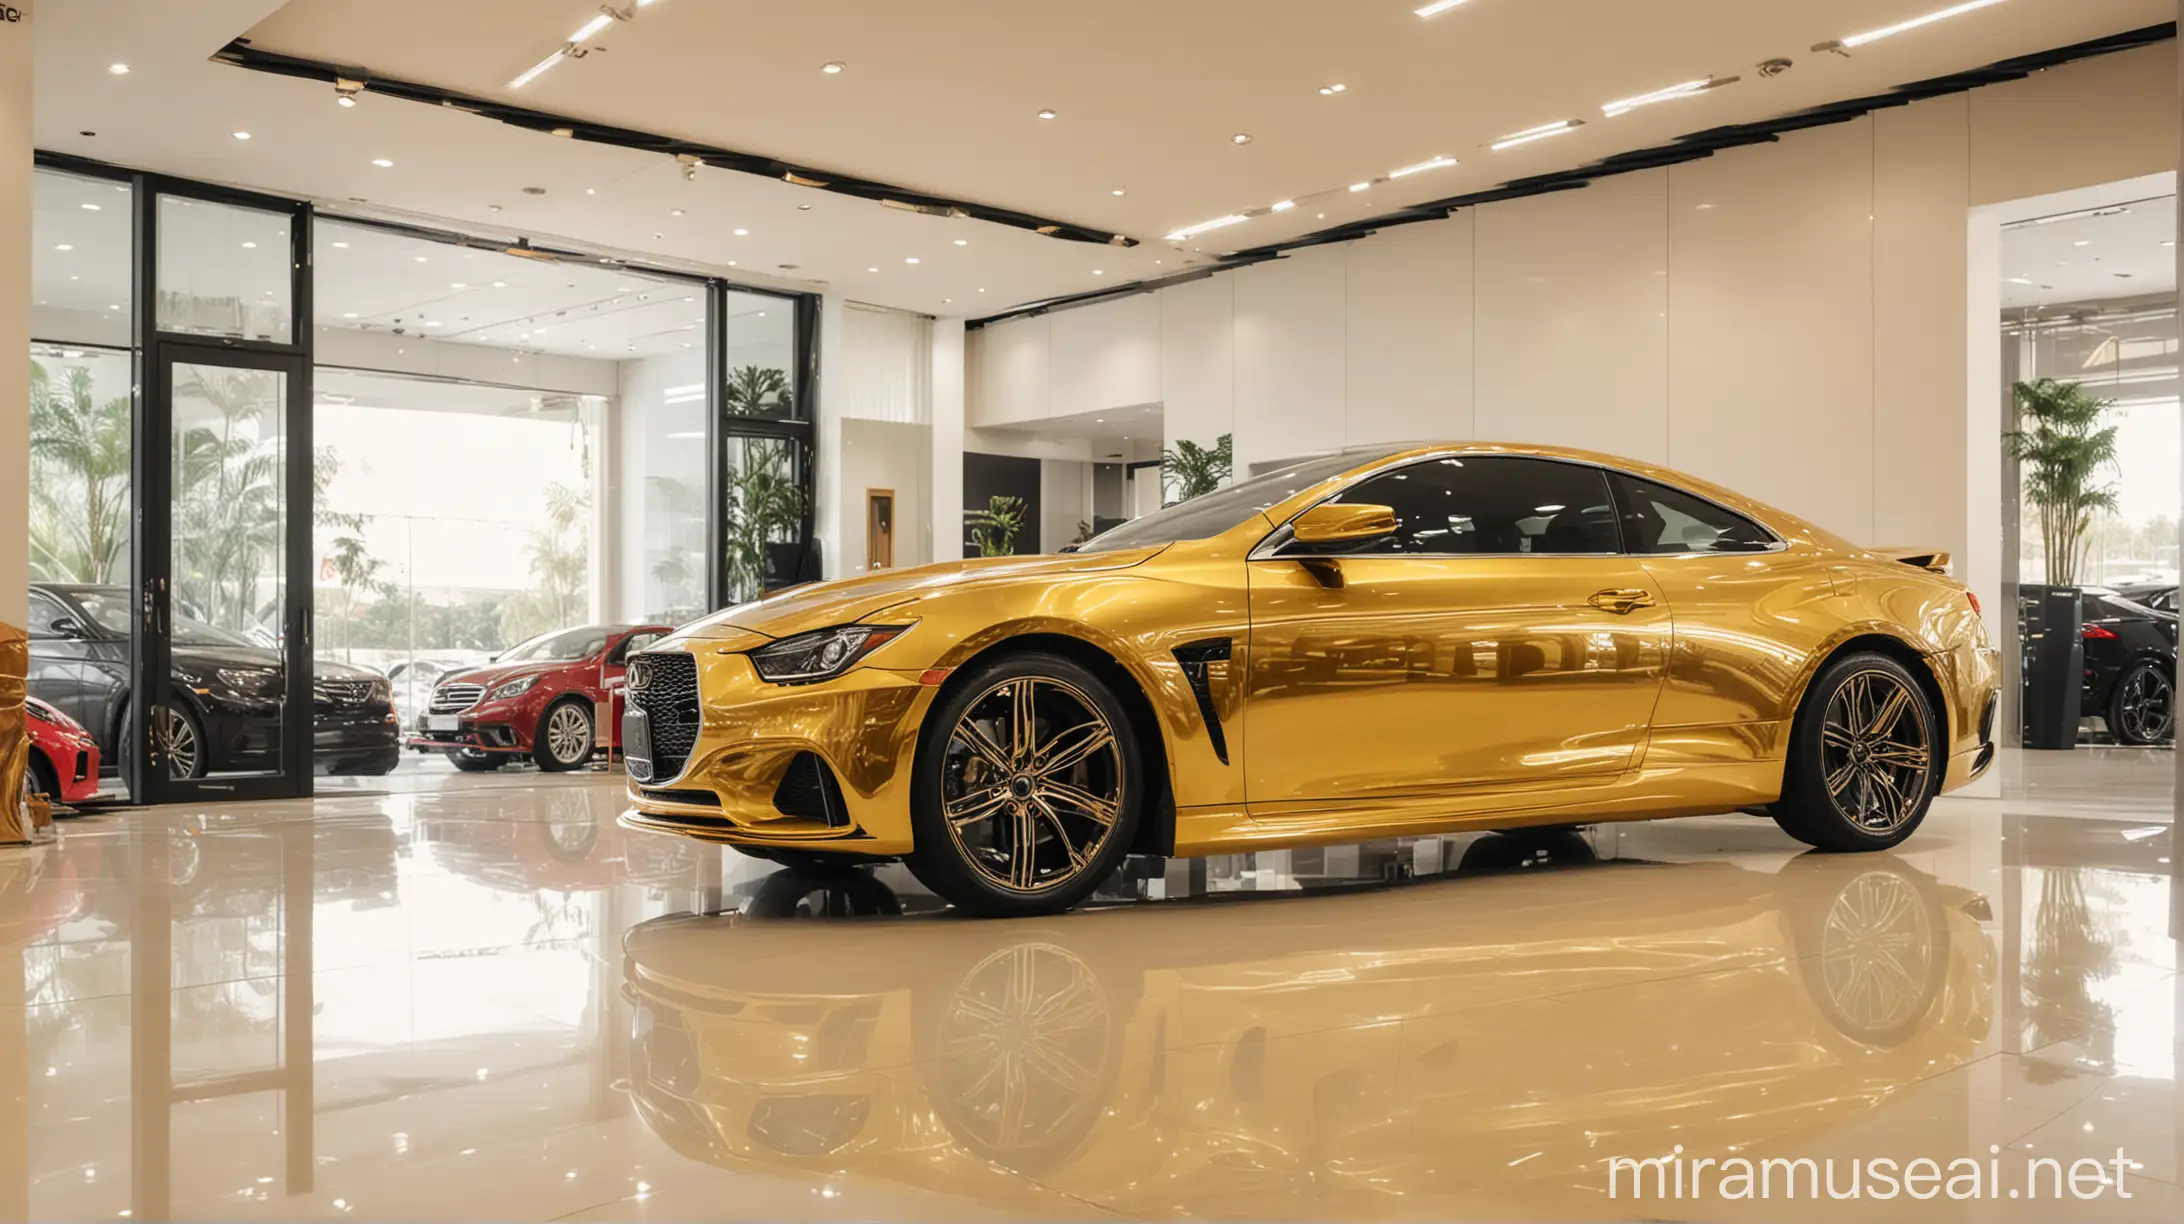 Luxurious Golden Car Displayed in Showroom